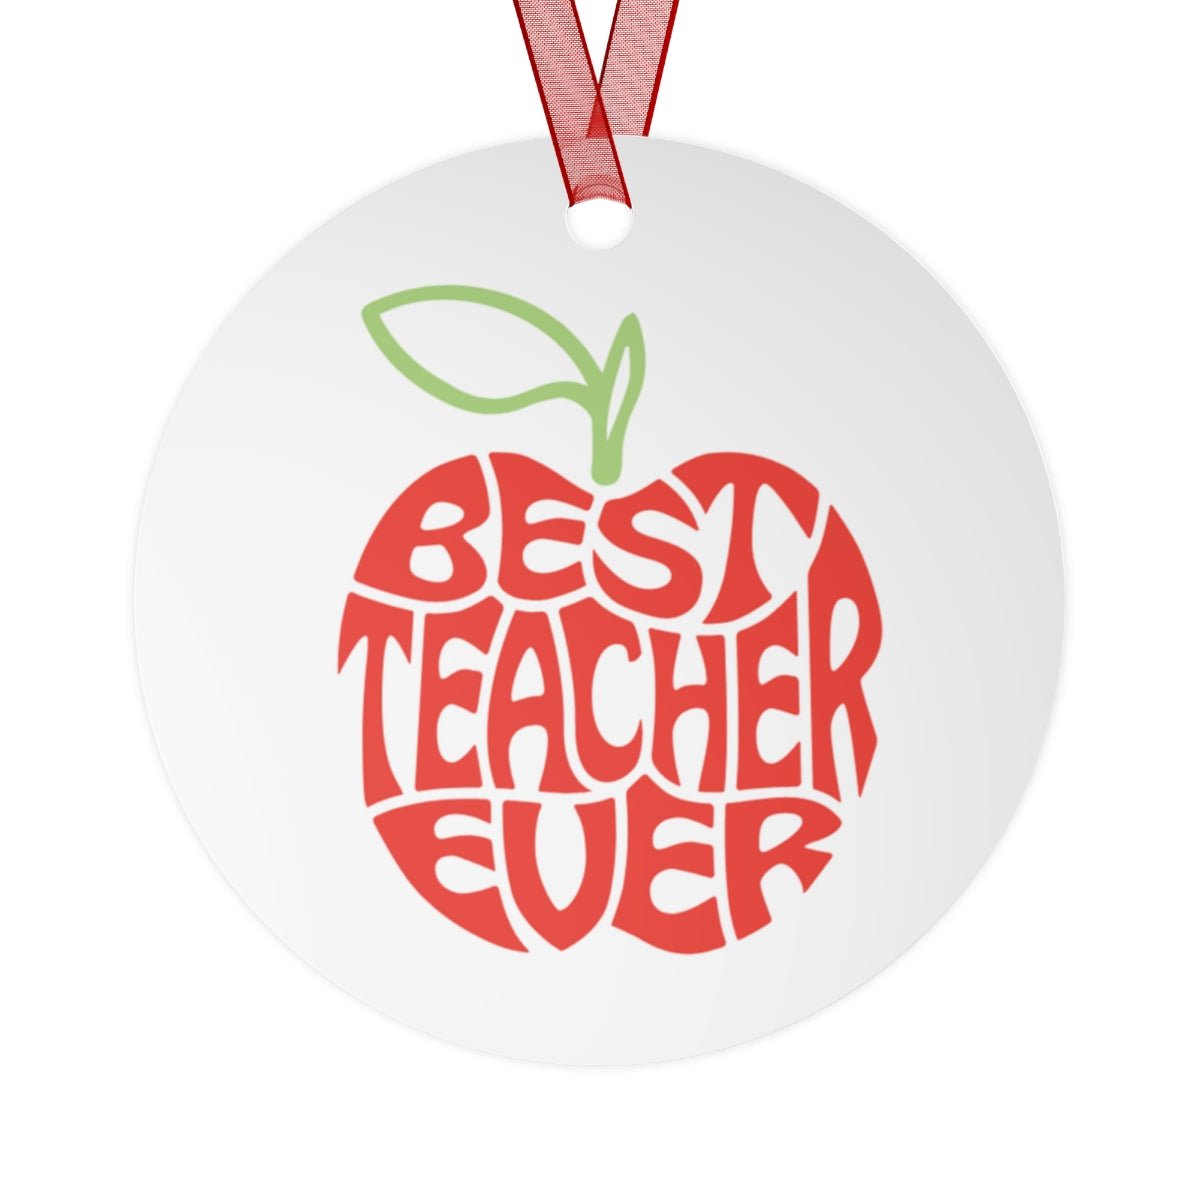 Best Teacher Ever Metal Keepsake & Ornament - The Kindness Cause Teacher Gift Donates to Charity